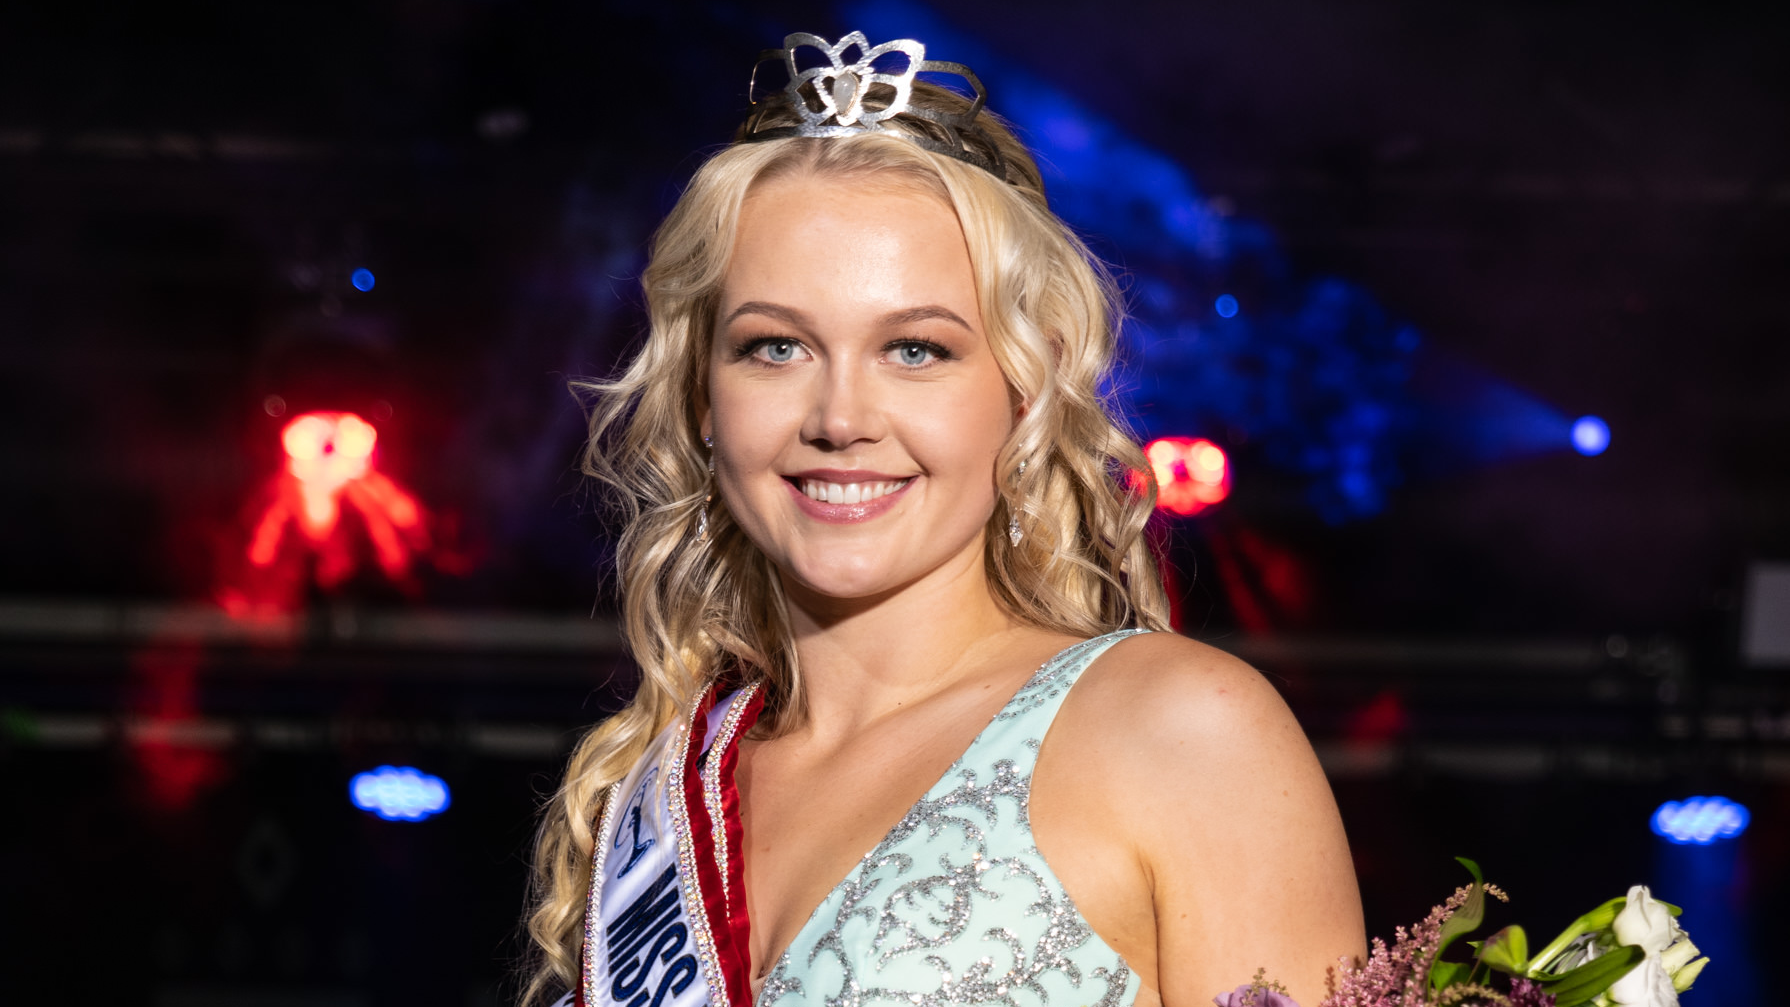 Winner Of Miss Norway allentown hours